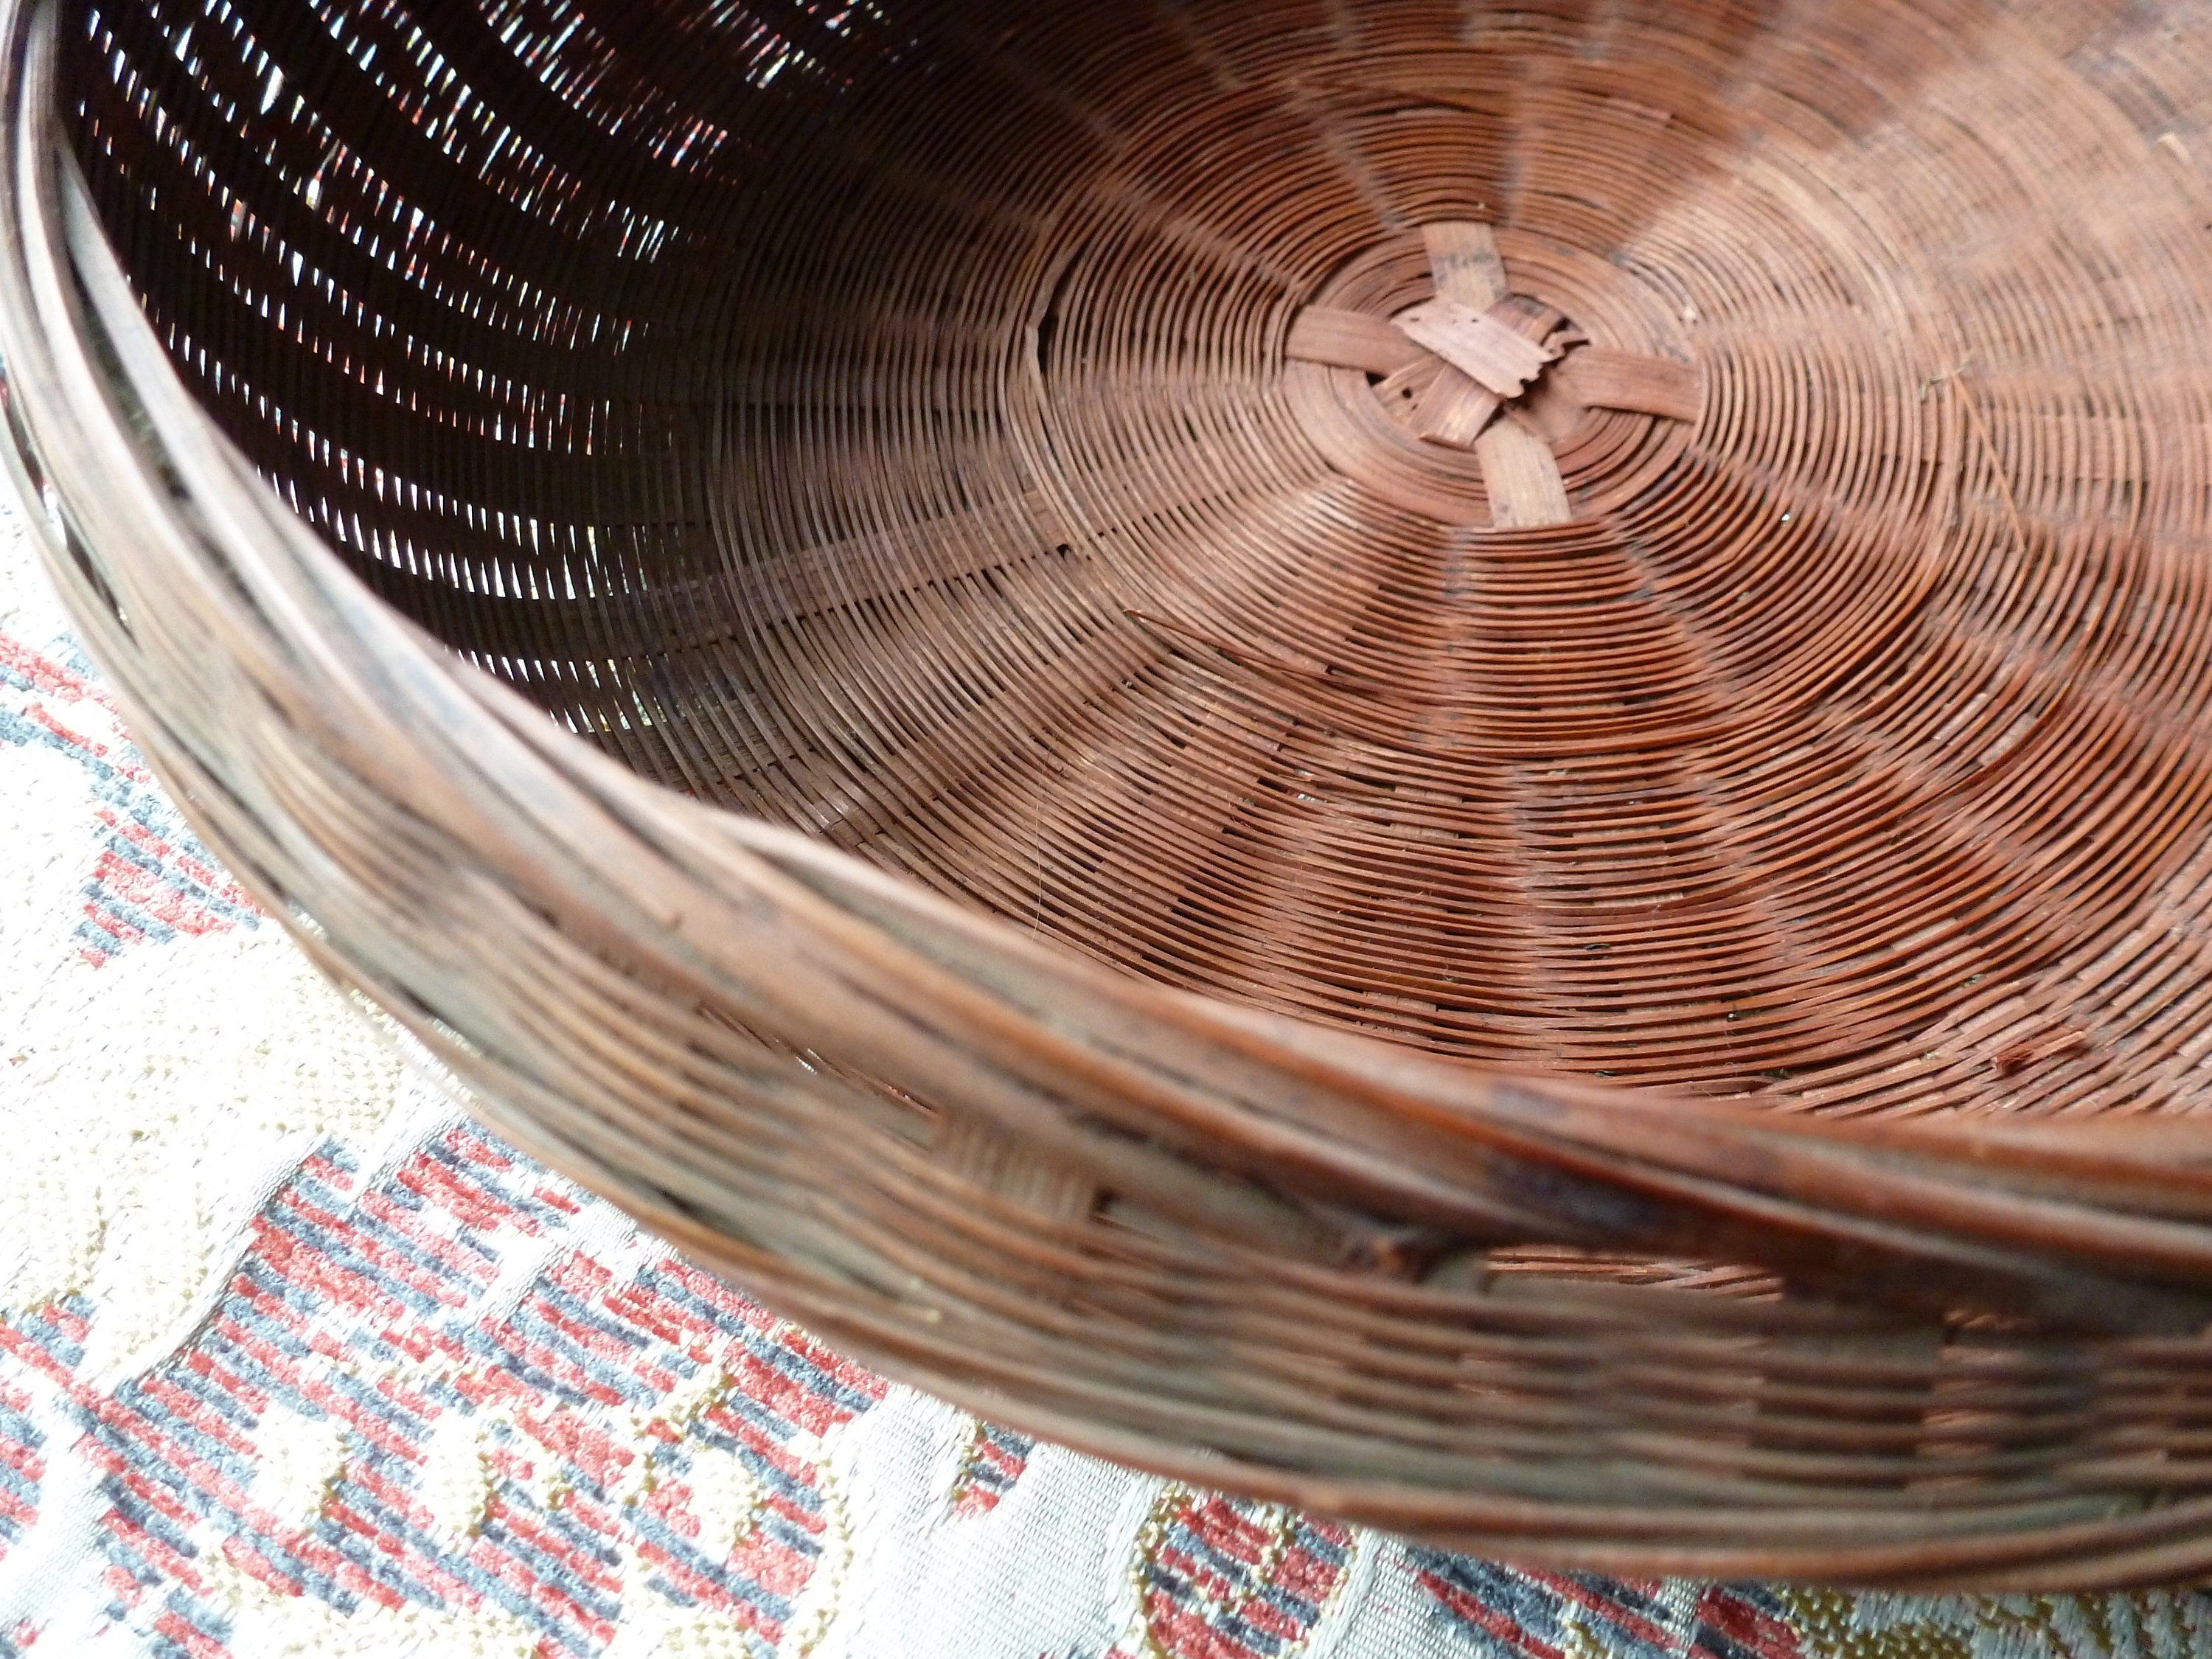 wool basket round, sewing basket, made from bamboo weaving